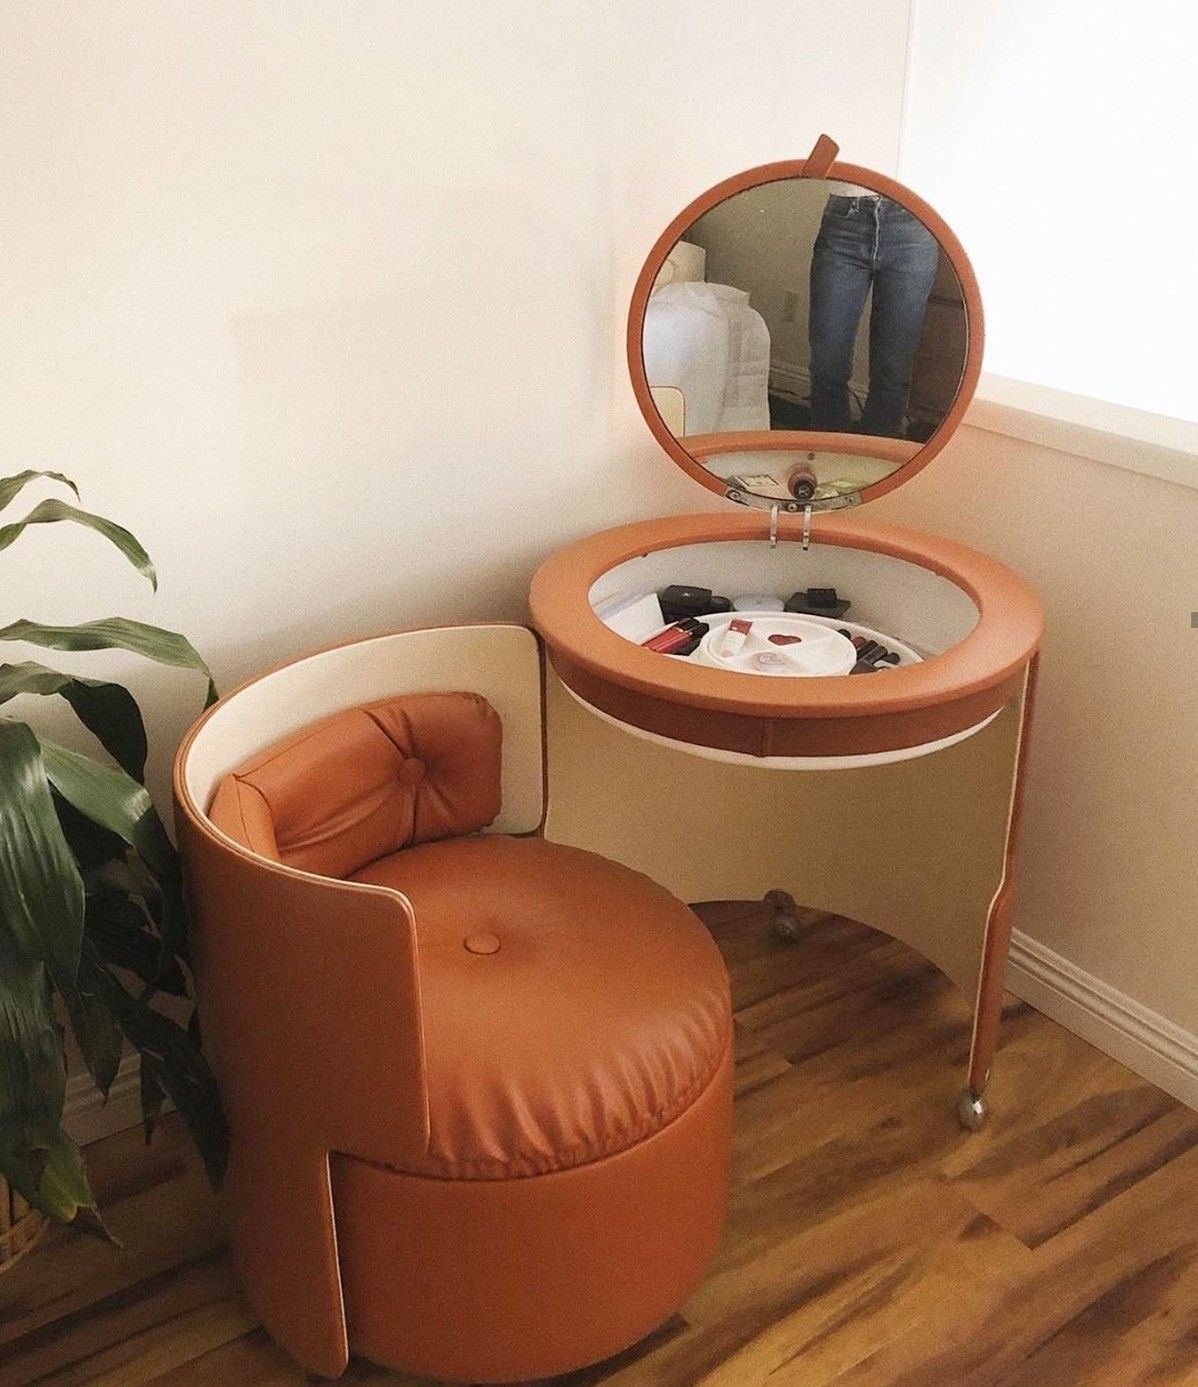 Apartment Living Room Design: Comfortably Elegant